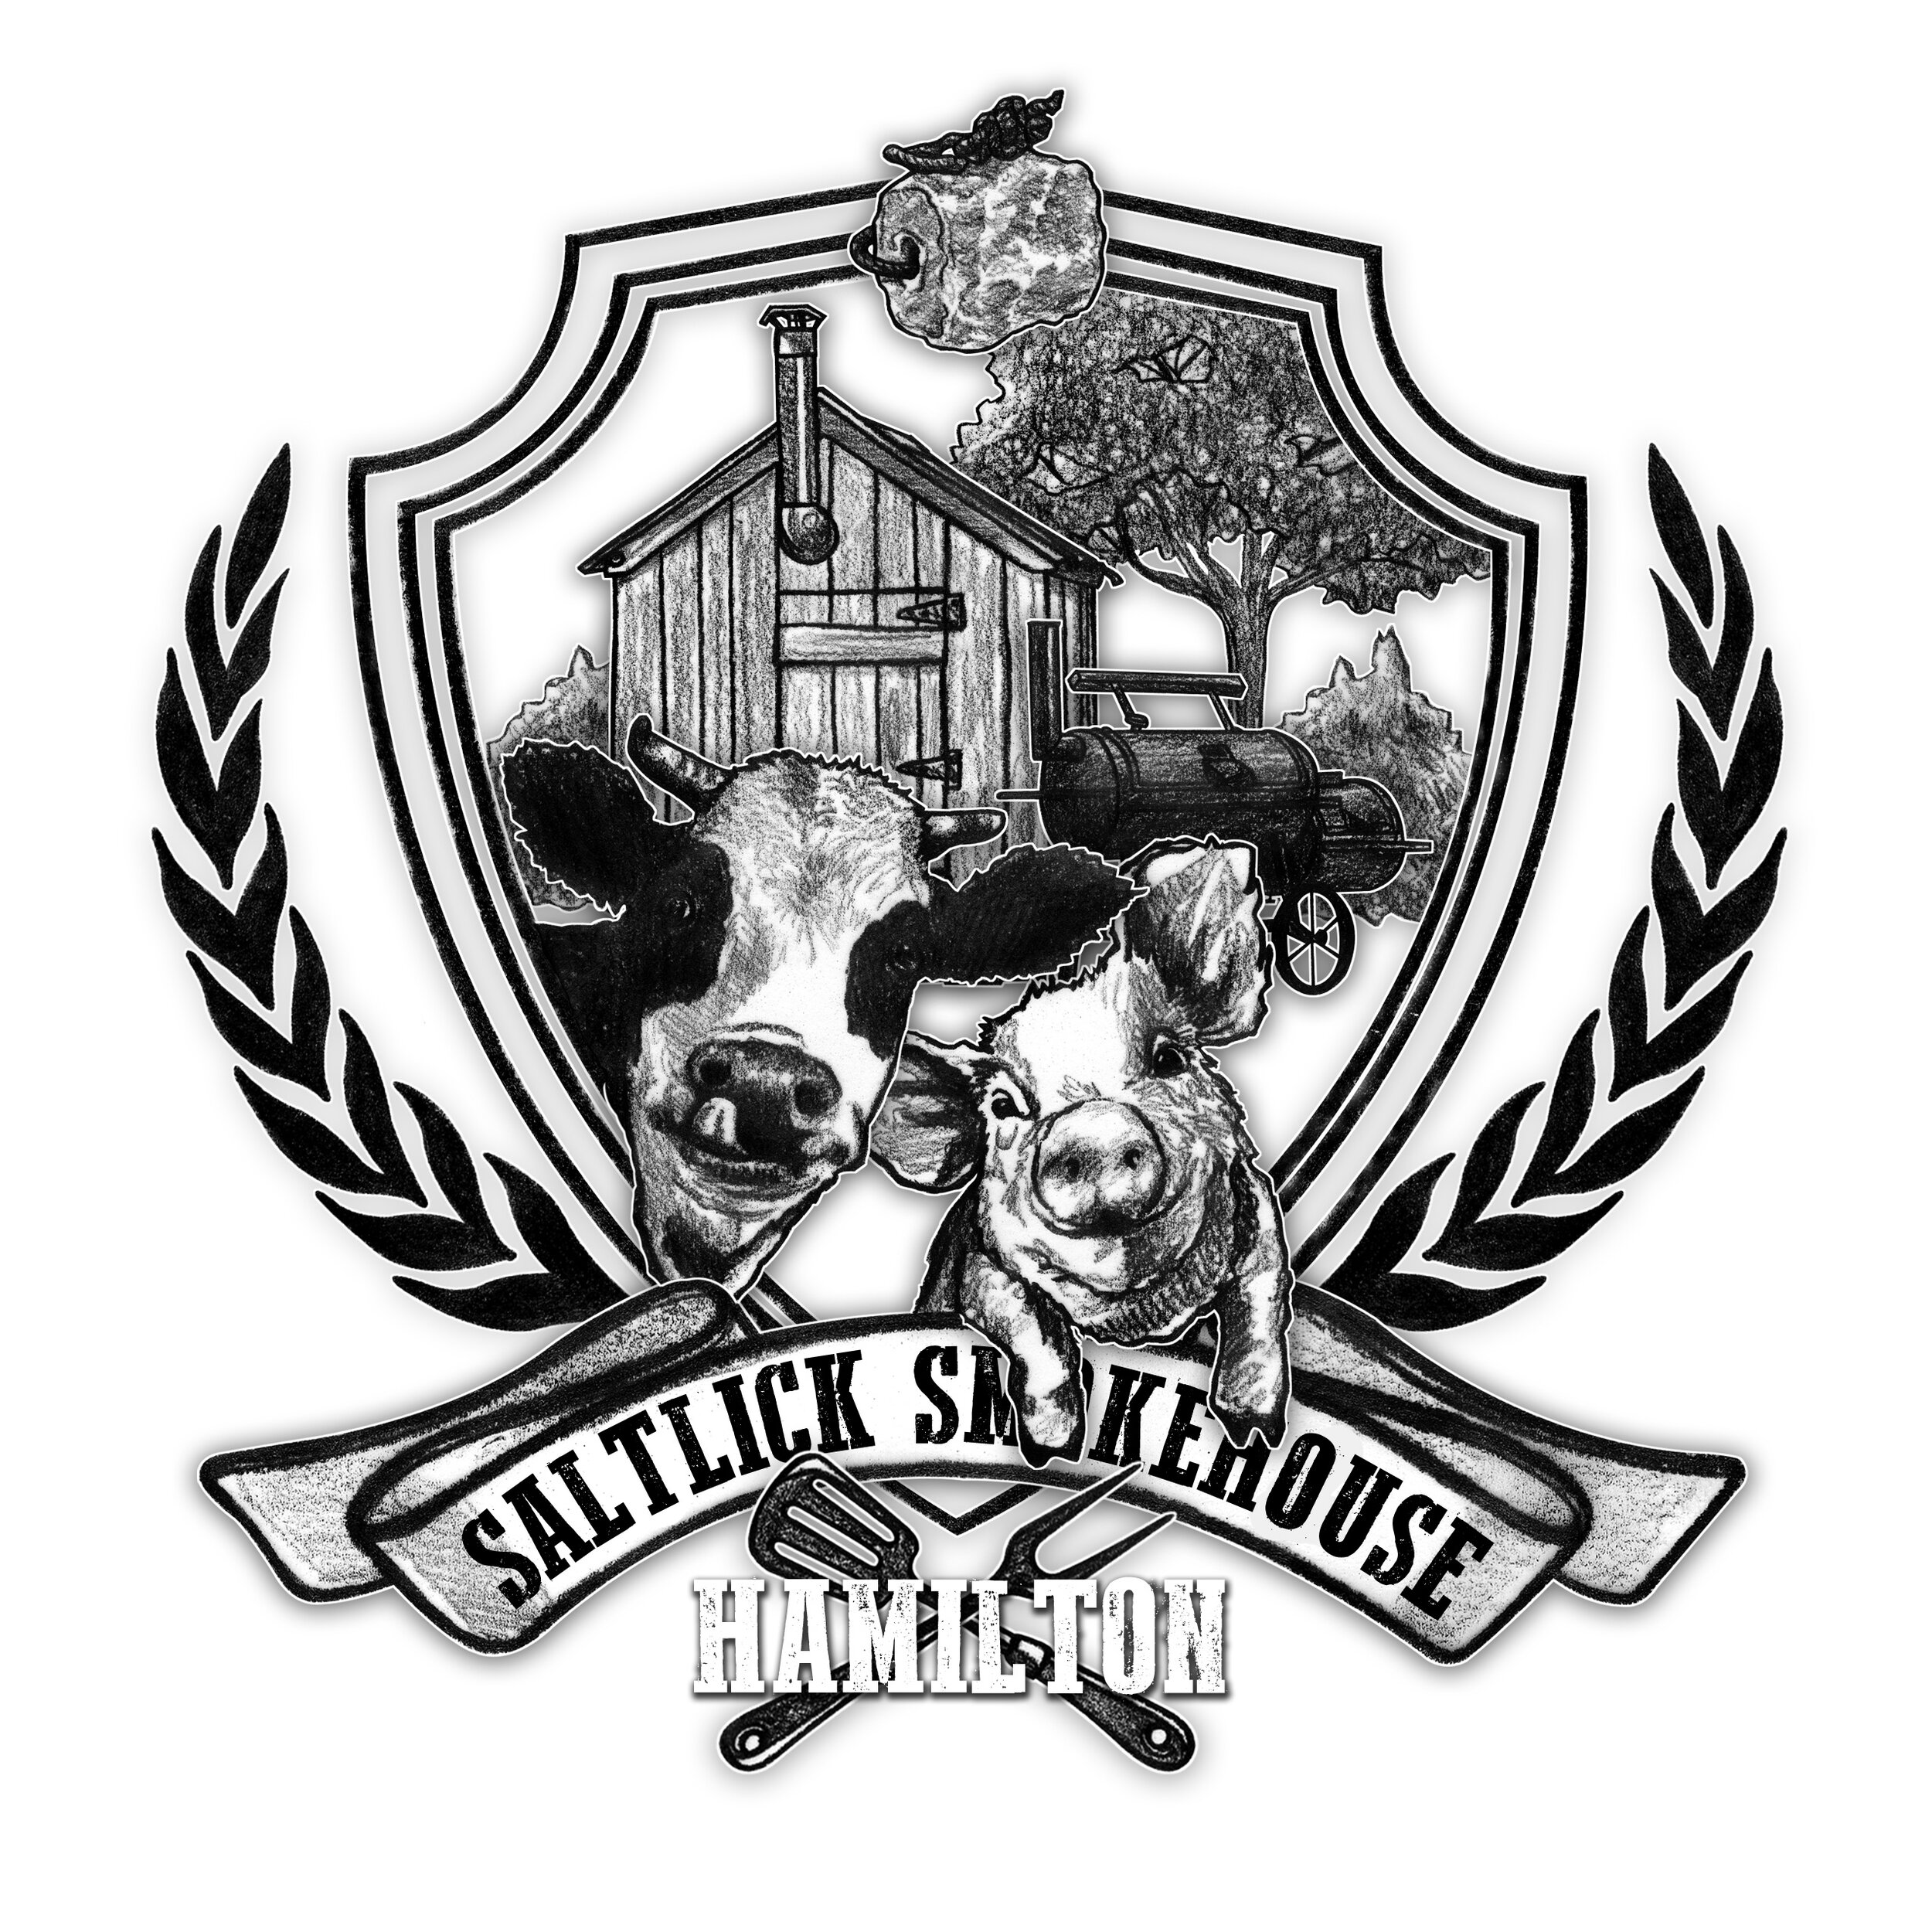 Saltlick-Smokehouse-Crest.jpg